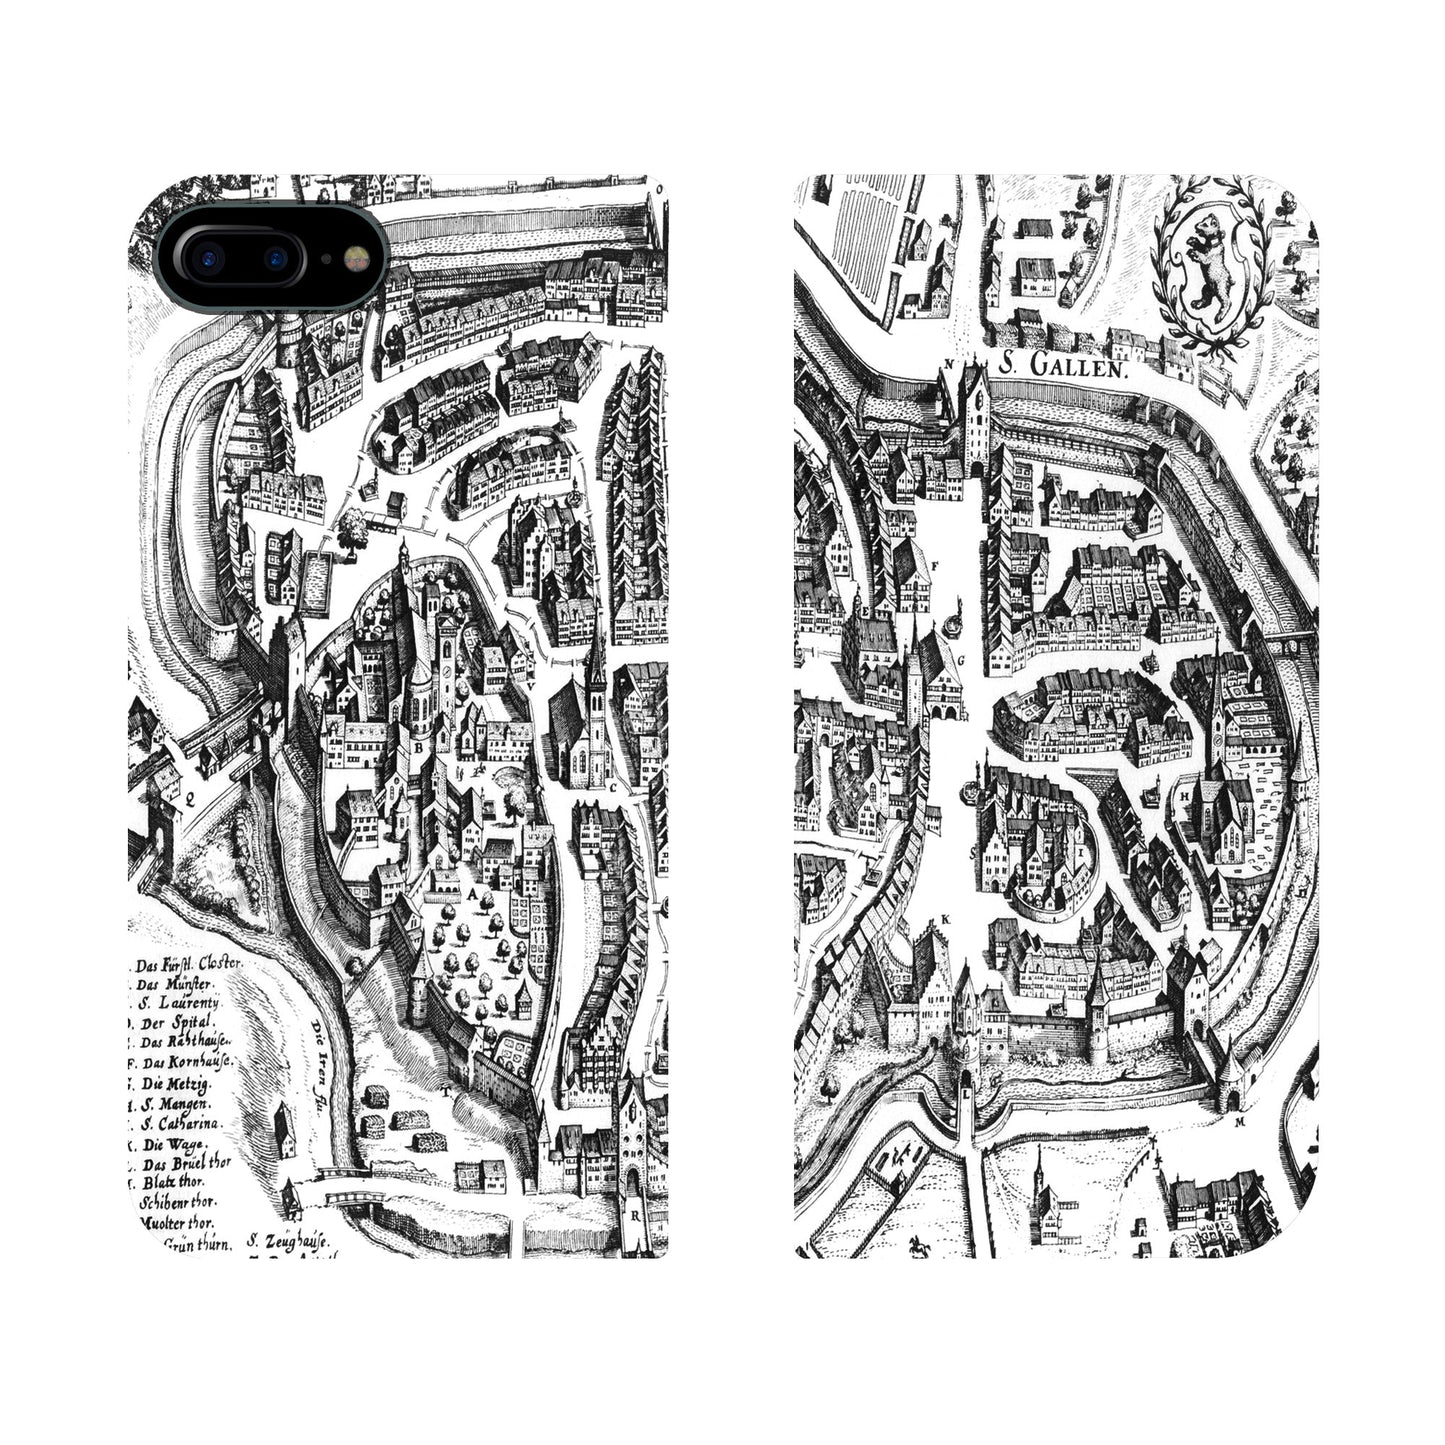 St. Gallen Merian Panorama Case für iPhone 6/6S/7/8 Plus